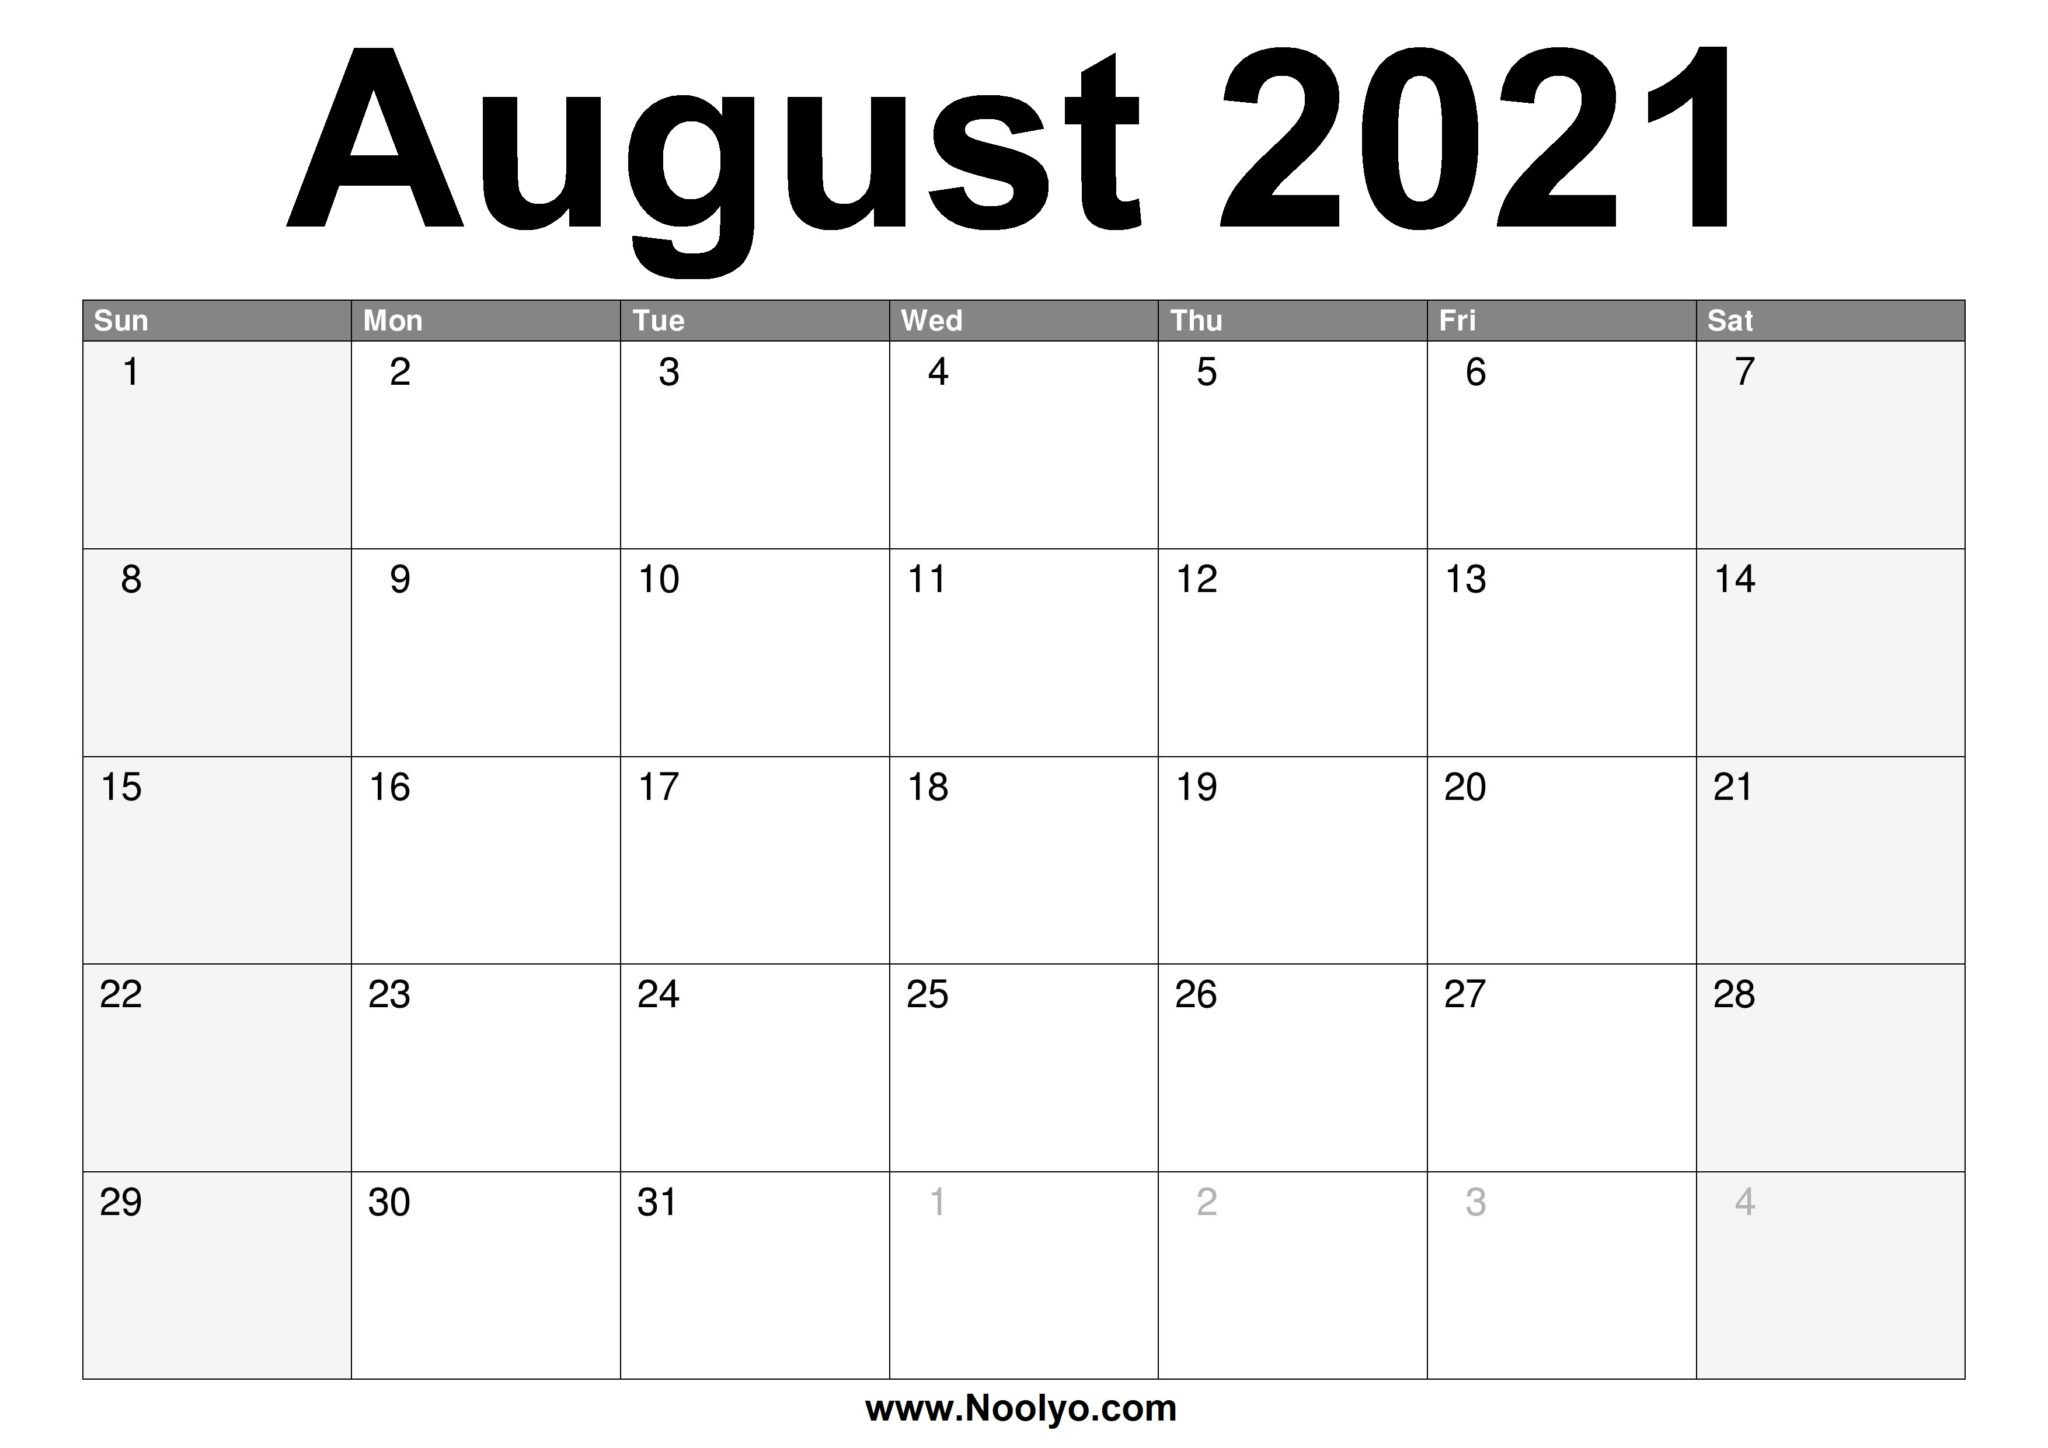 August 2021 Calendar Printable - Free Download - Noolyo-August 2021 Calendar Printable